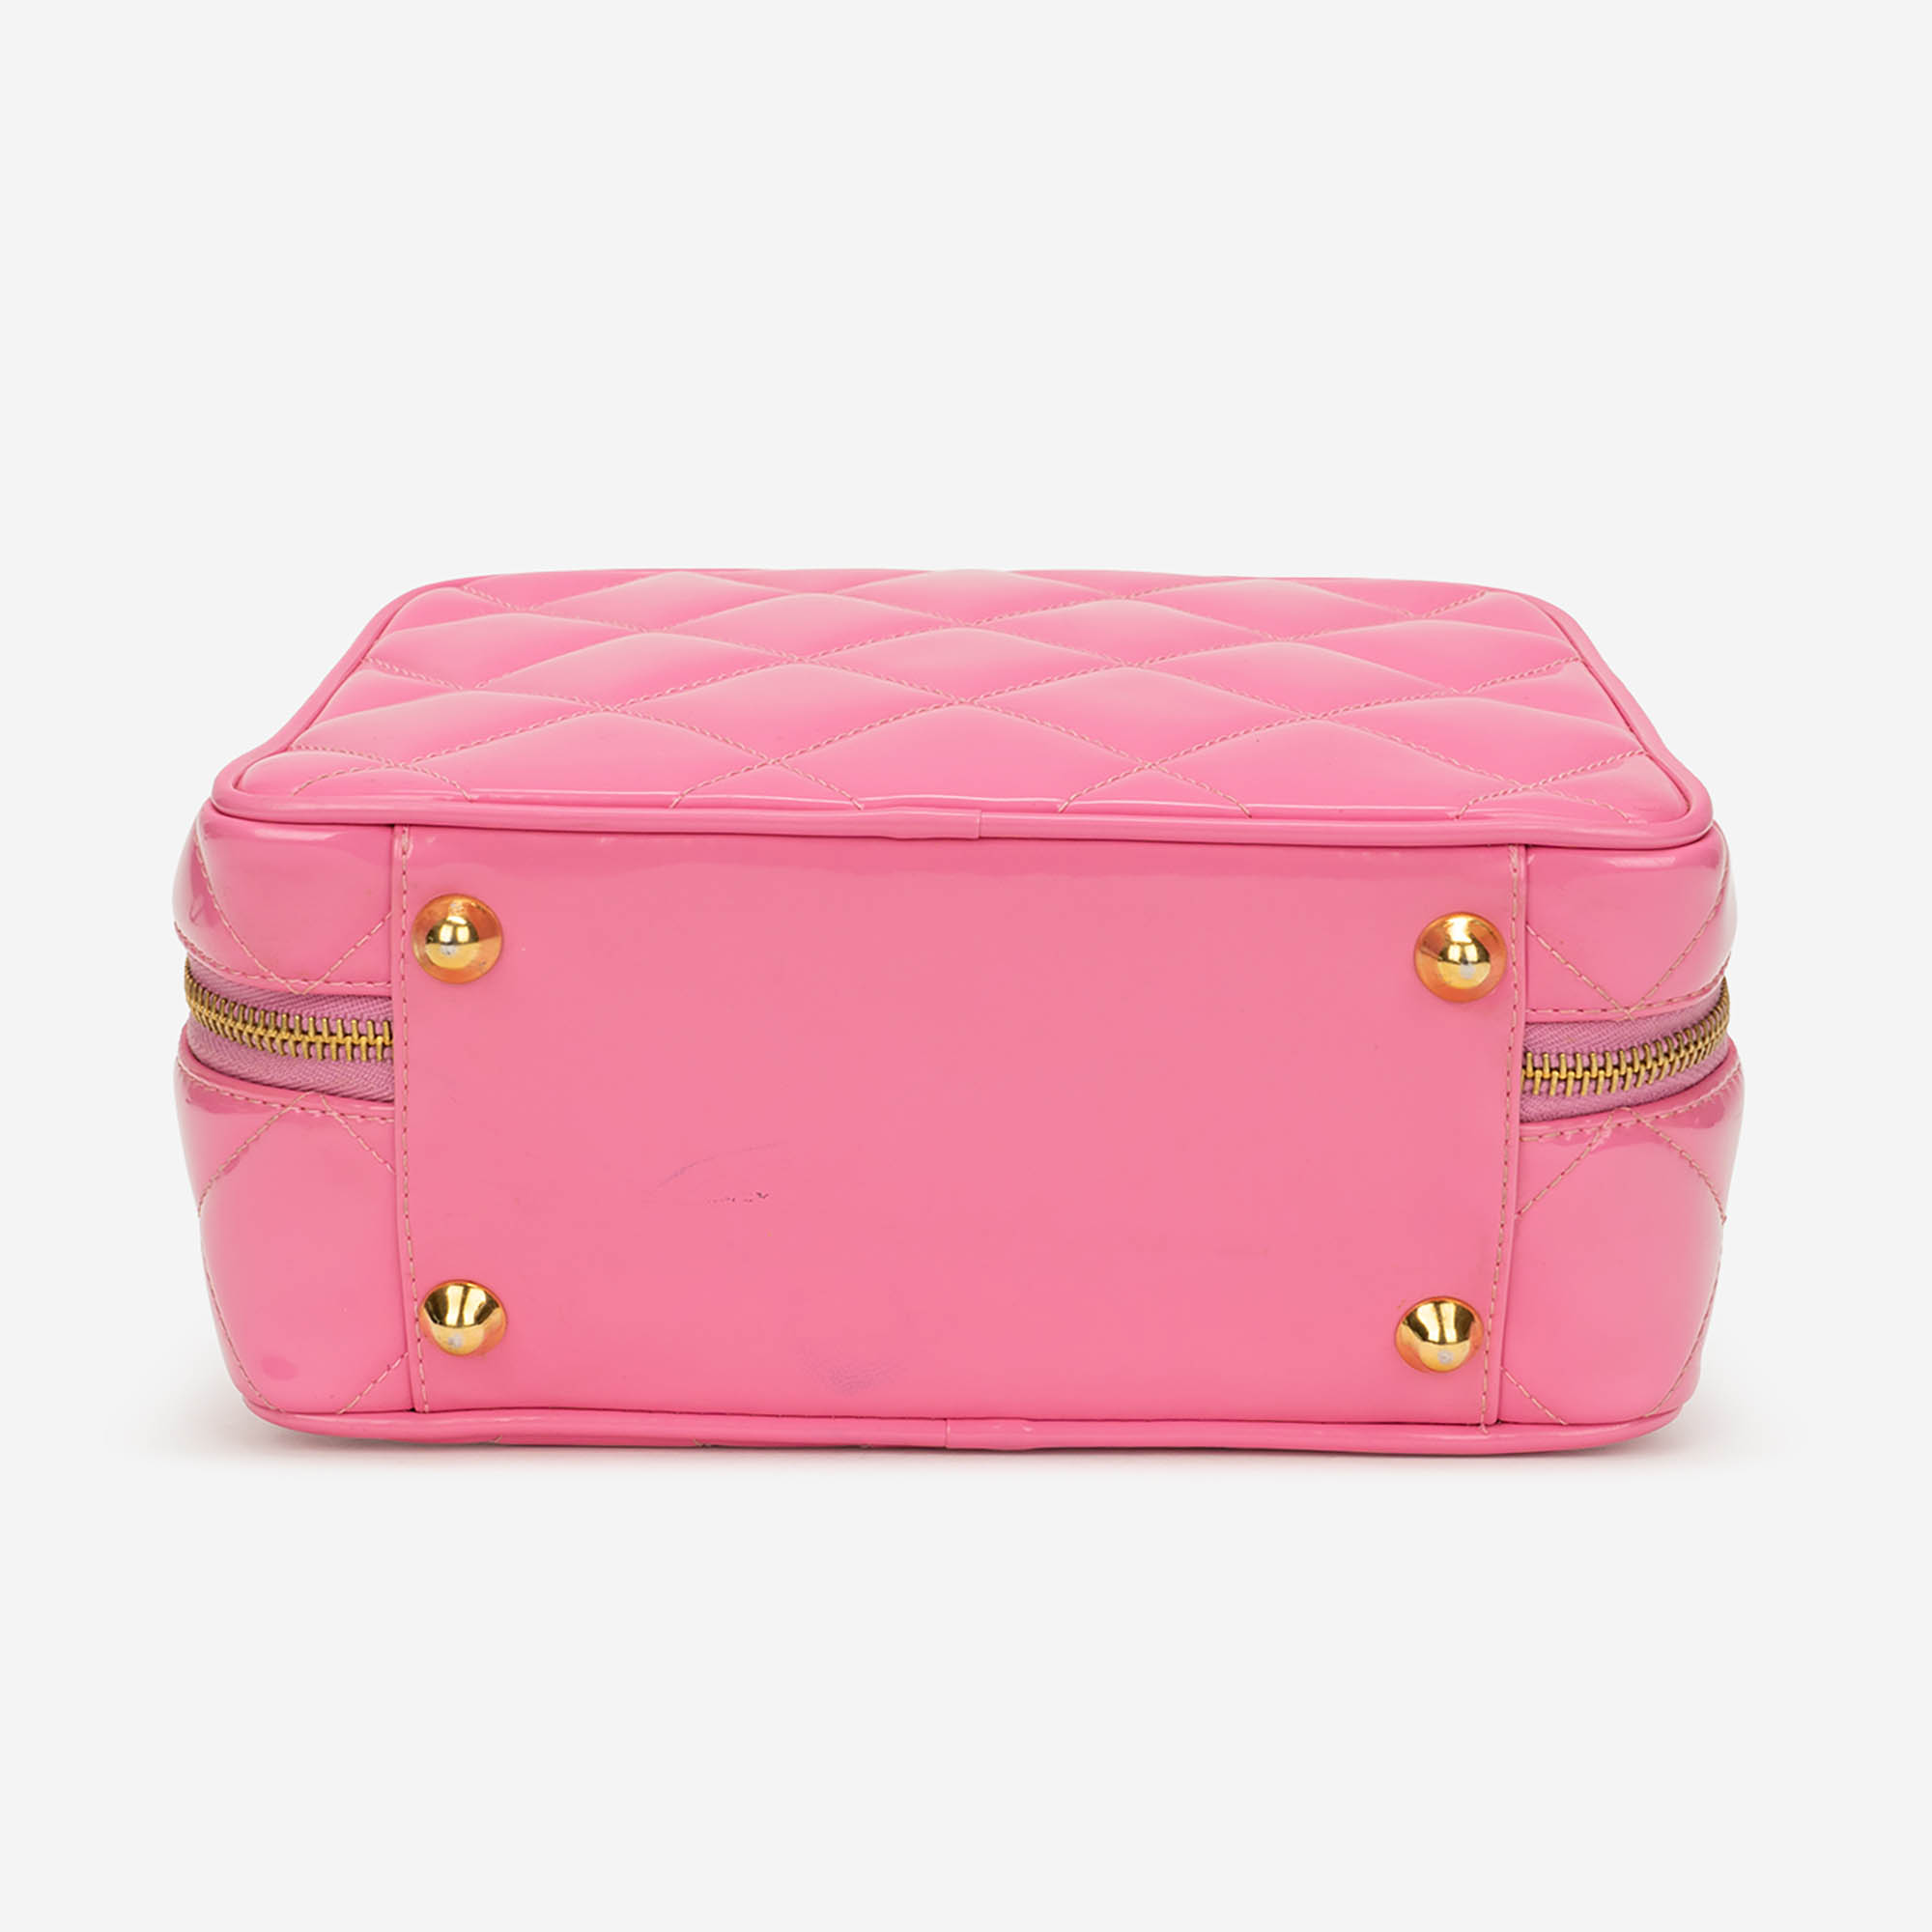 Pre-owned Chanel bag Vanity Case Medium Patent Pink Pink | Sell your designer bag on Saclab.com